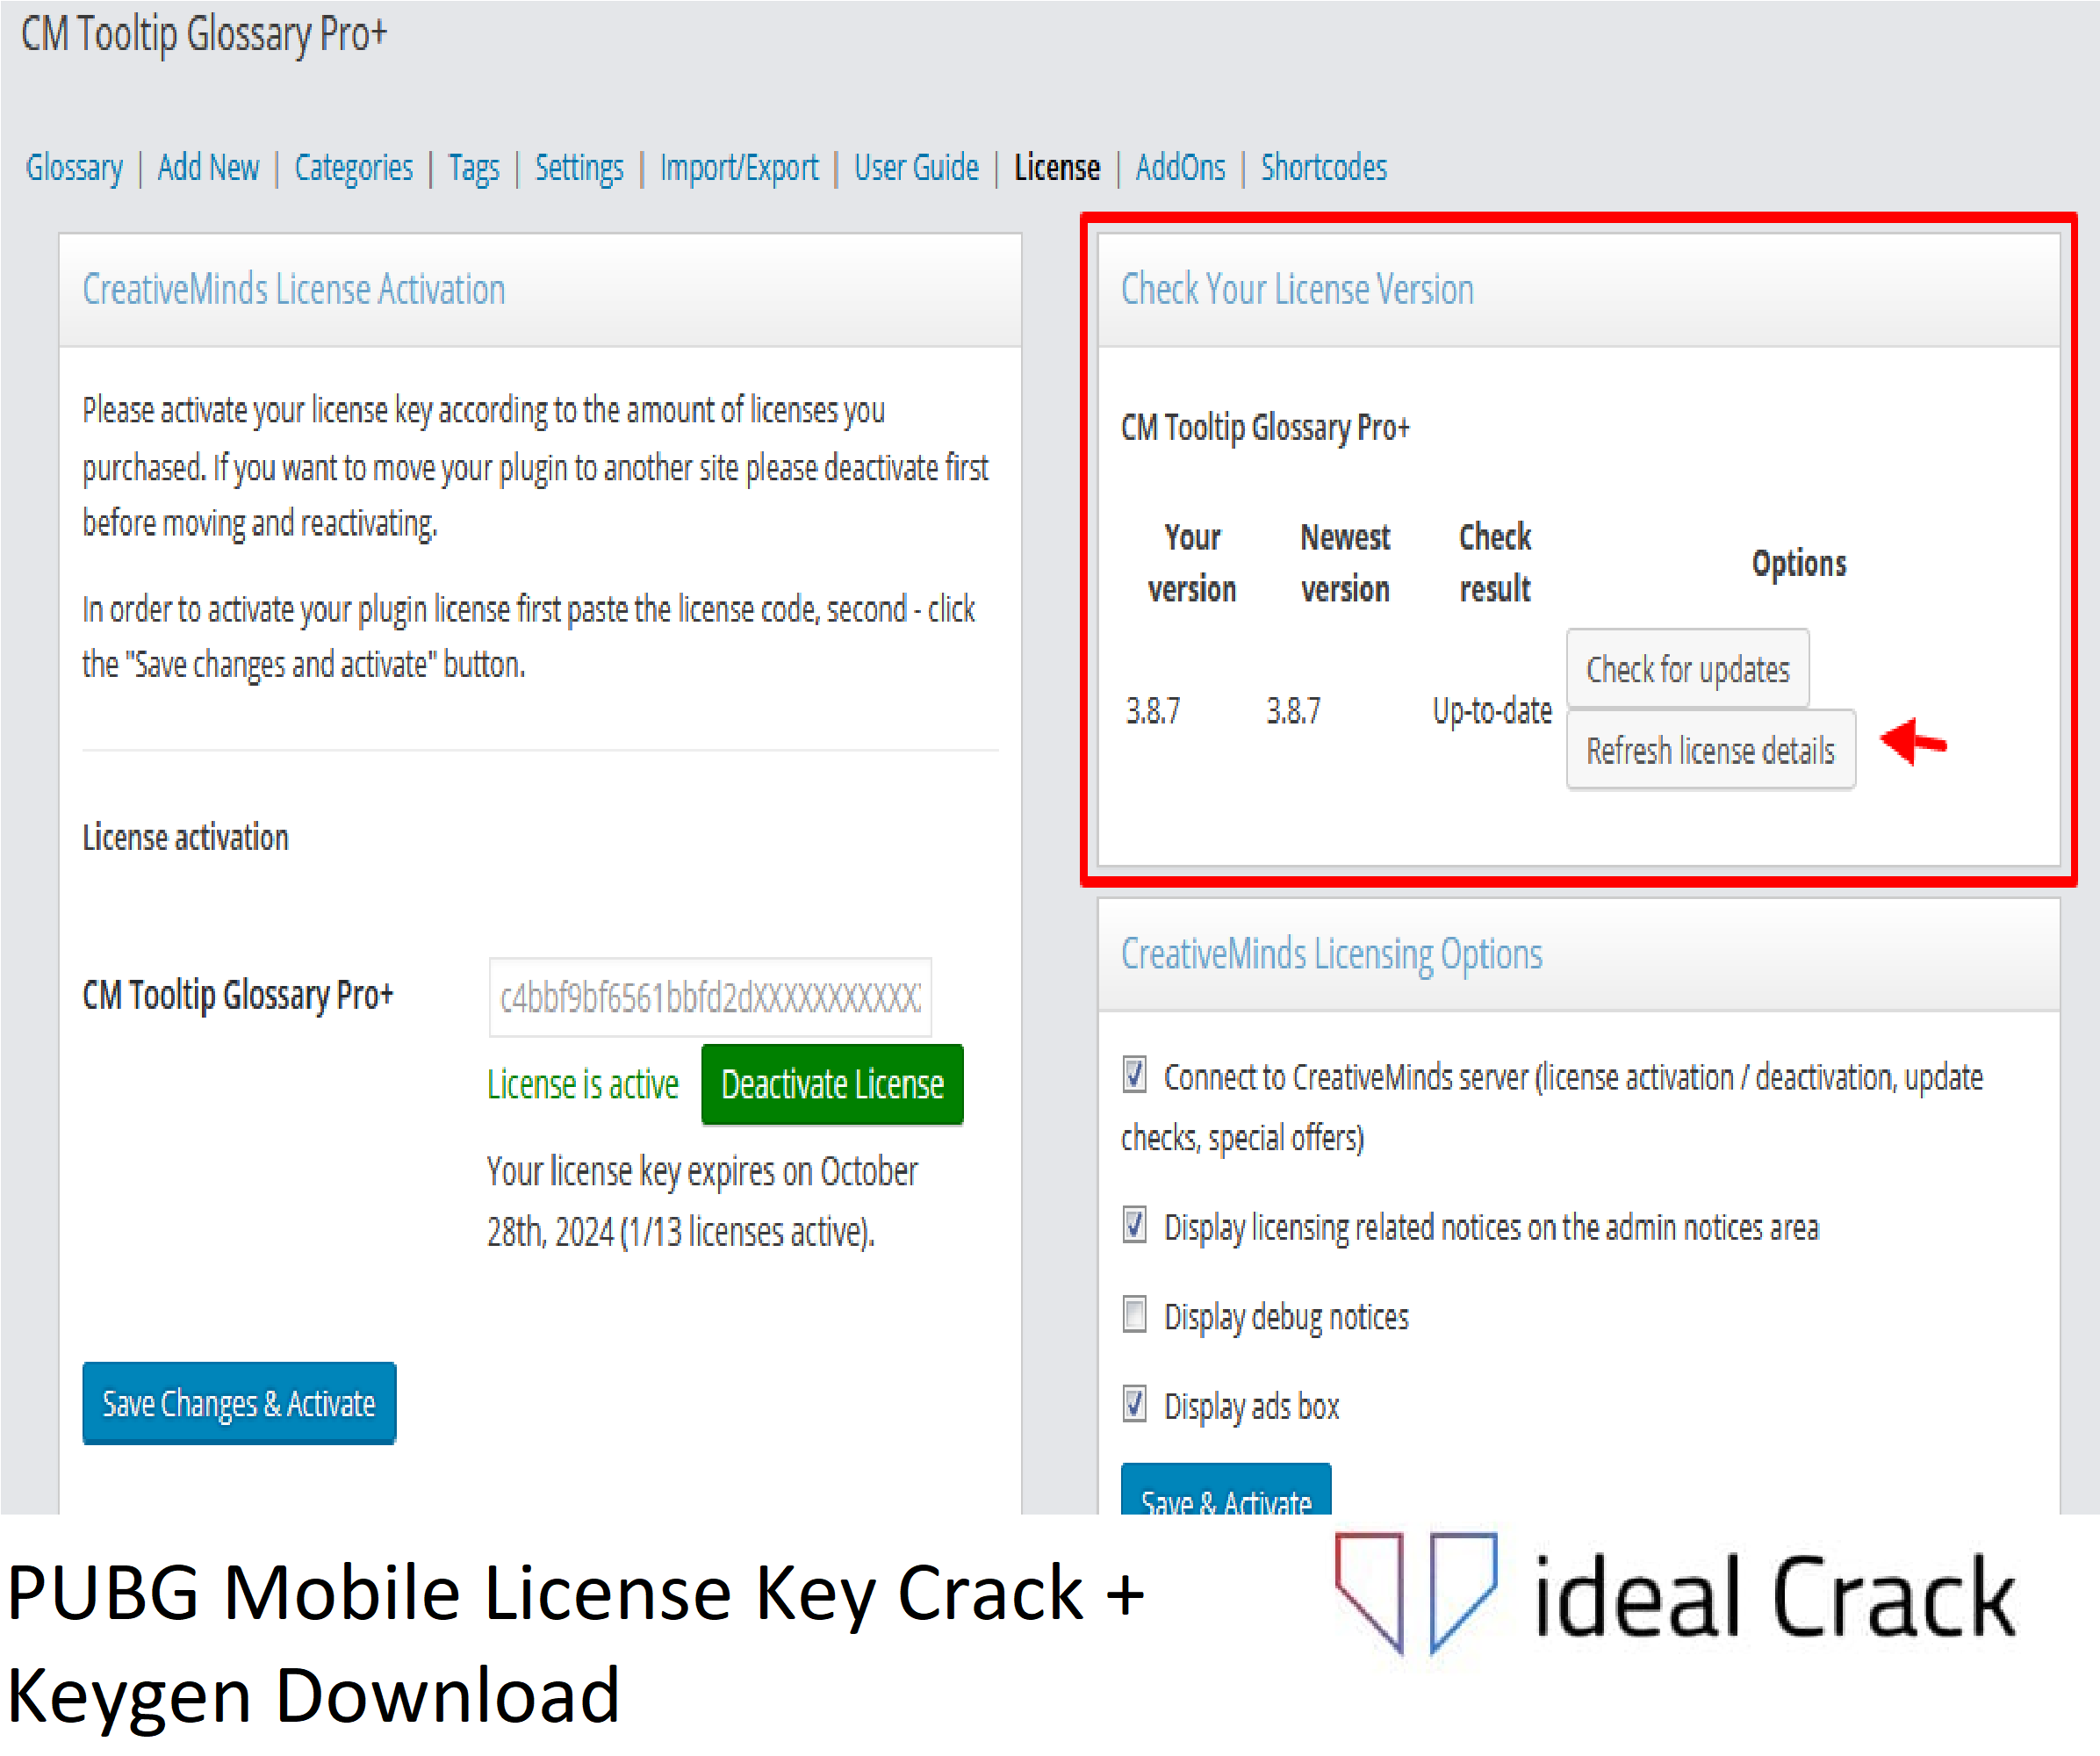 PUBG Mobile License Key Crack